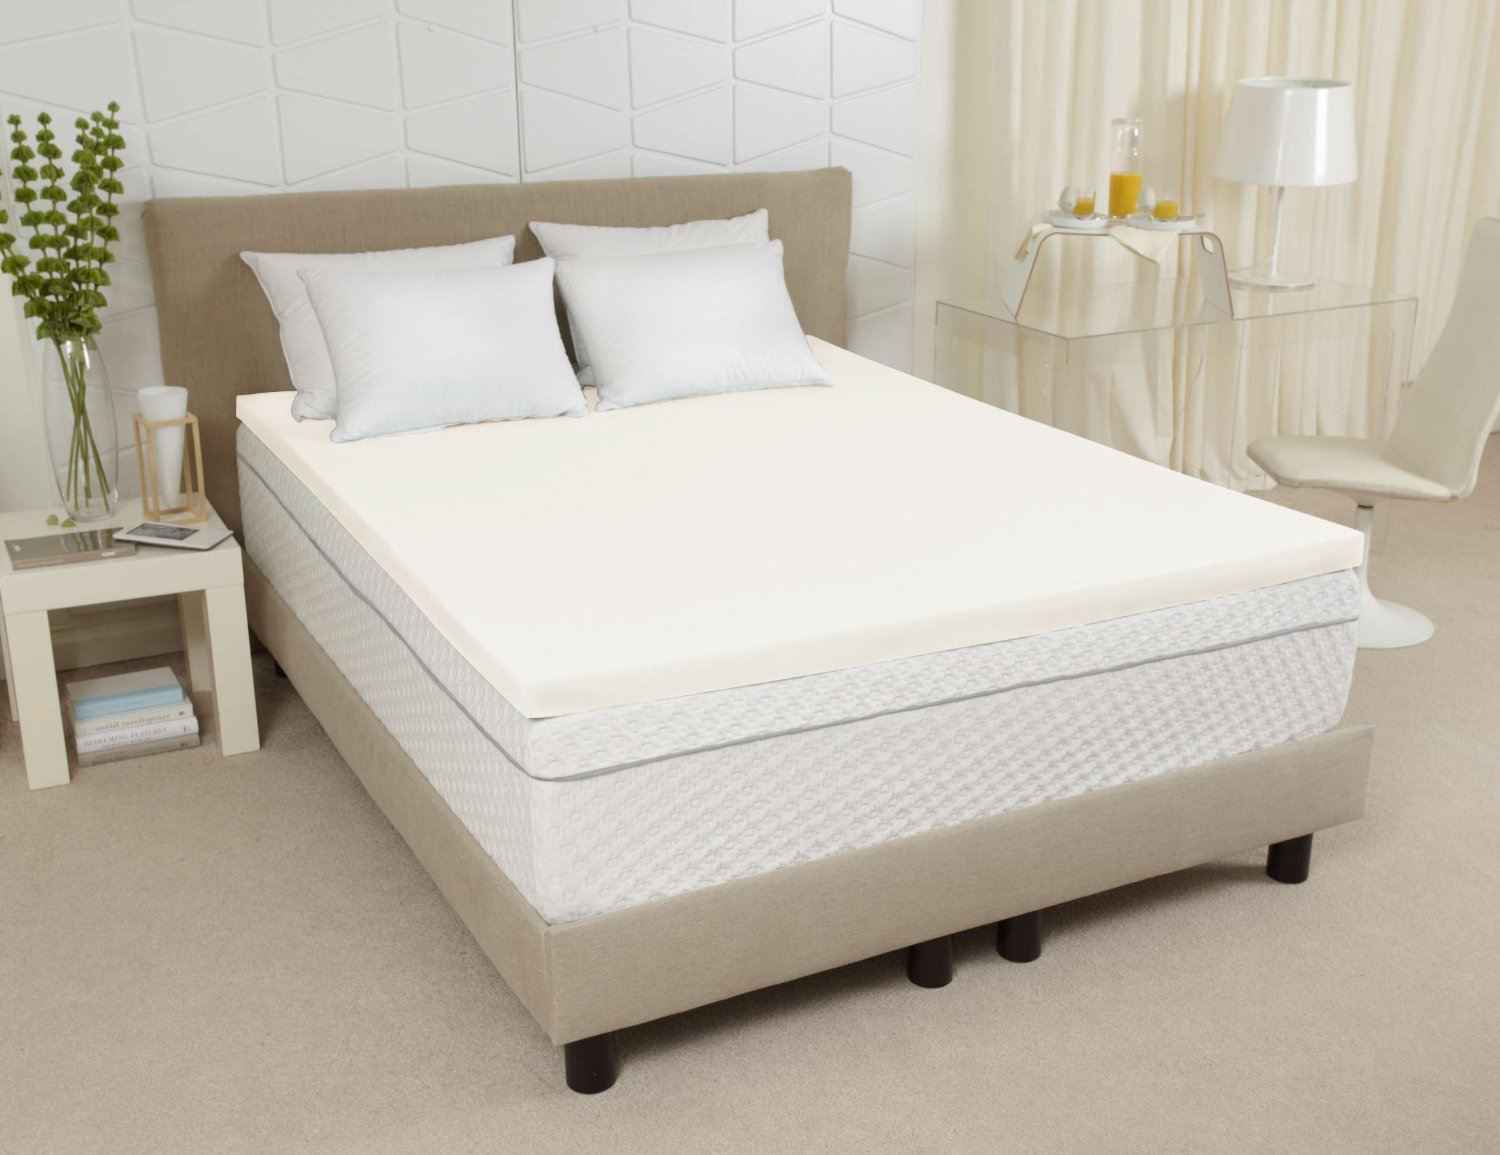 beds and memory foam mattress